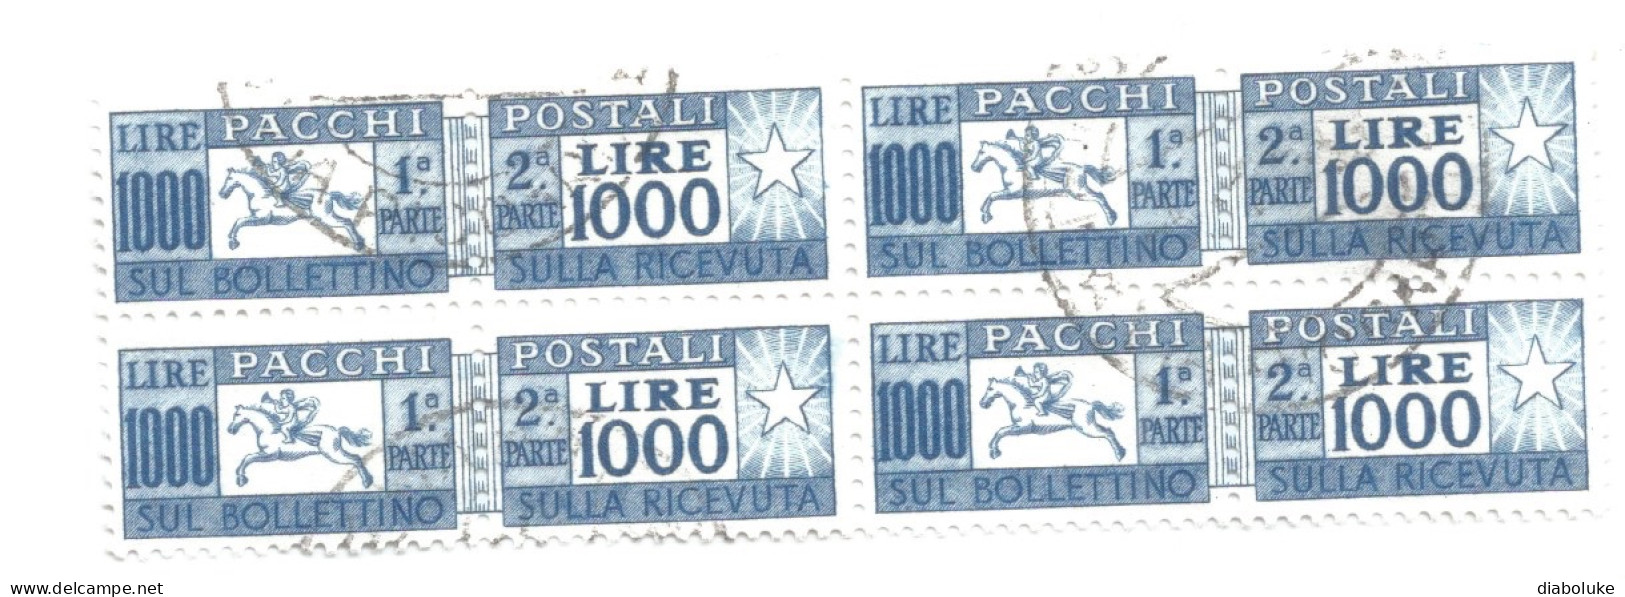 (REPUBBLICA ITALIANA) PACCHI POSTALI, 1000 LIRE - Quartina Usata - Pacchi Postali